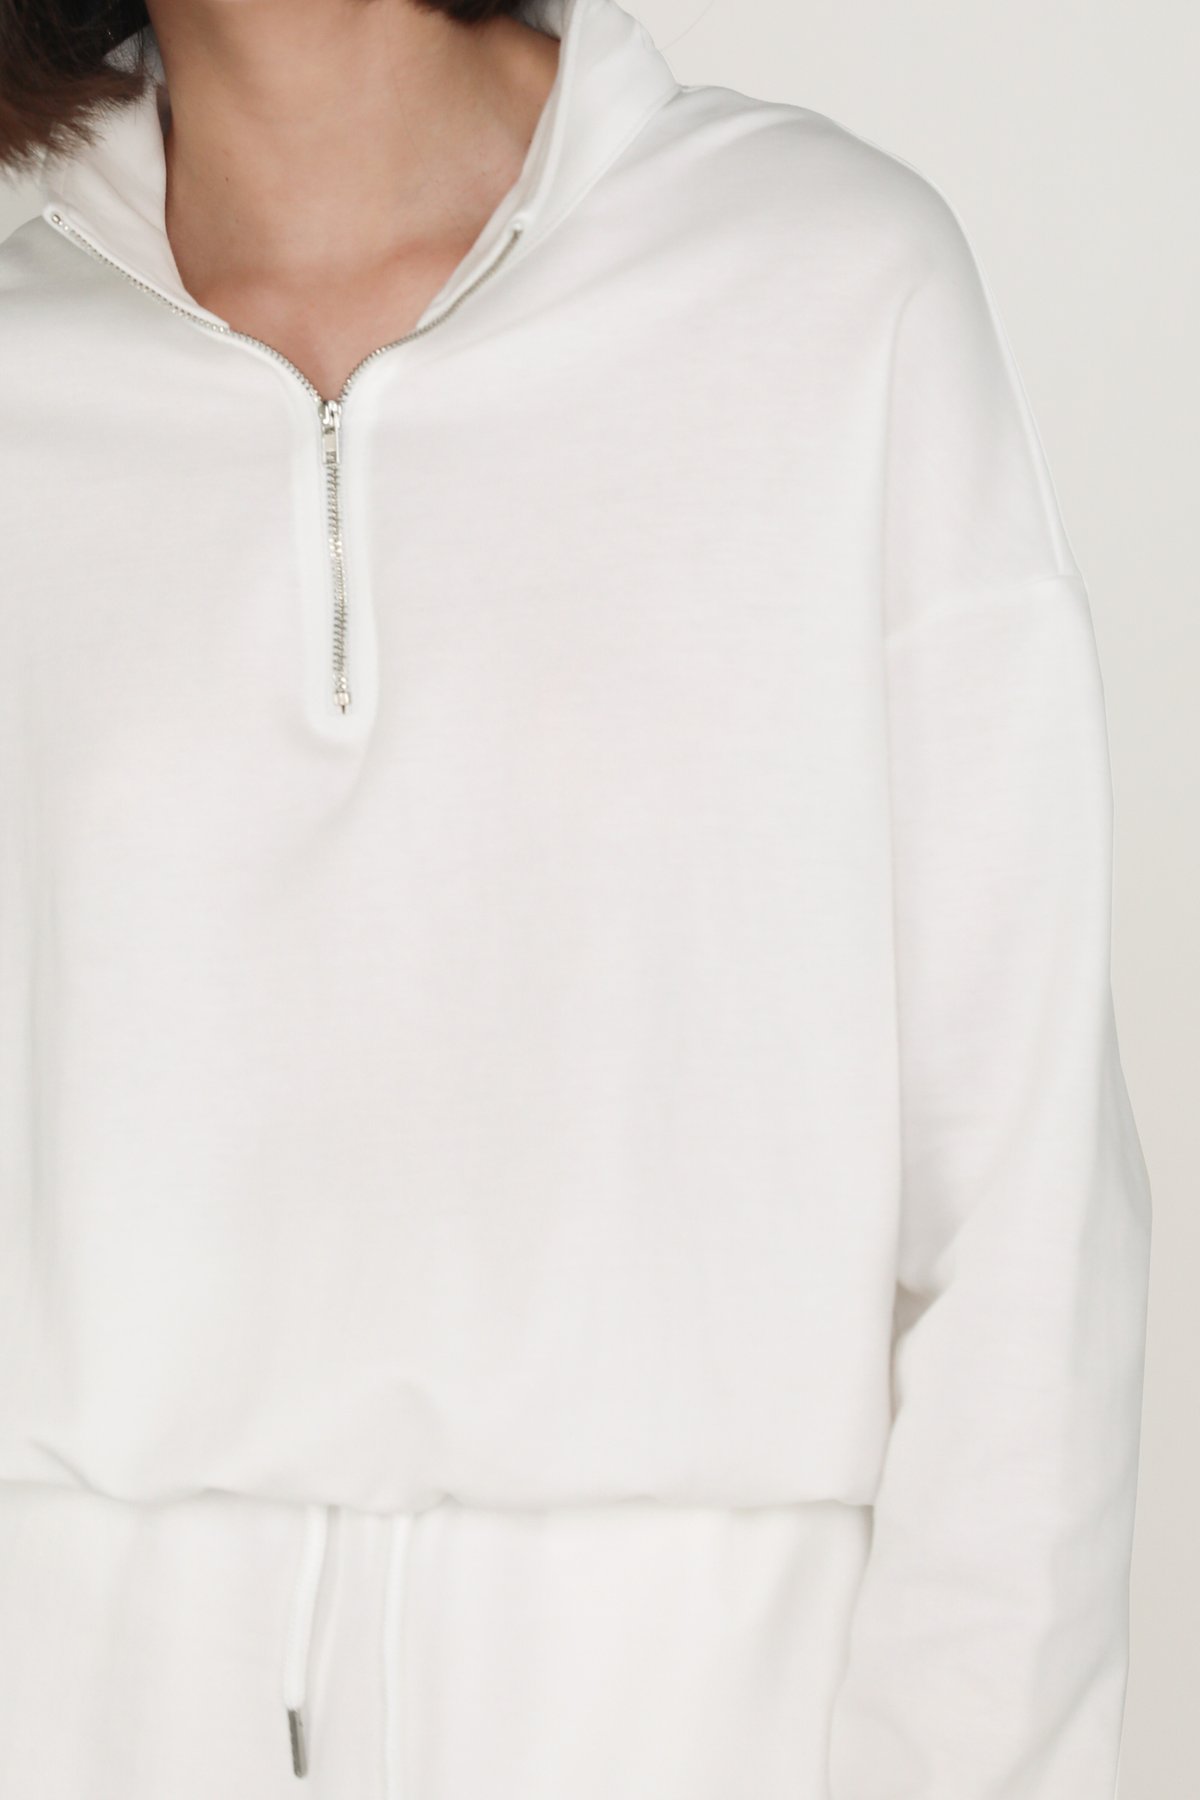 Lauv Half Zip Sweater (White)